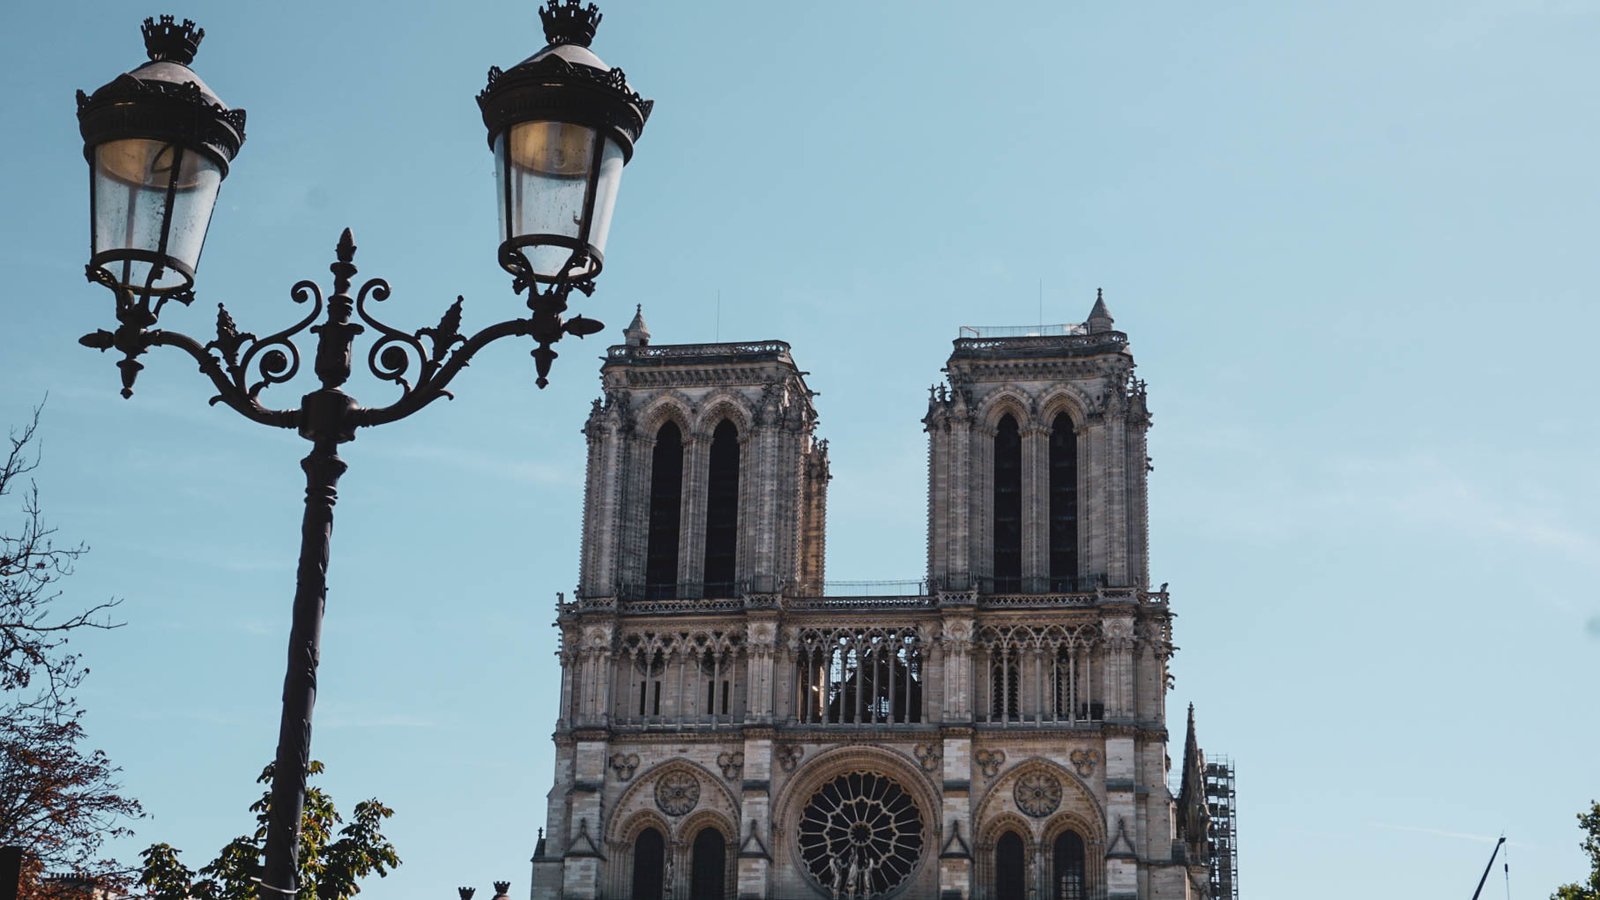 Notre Dame in Paris